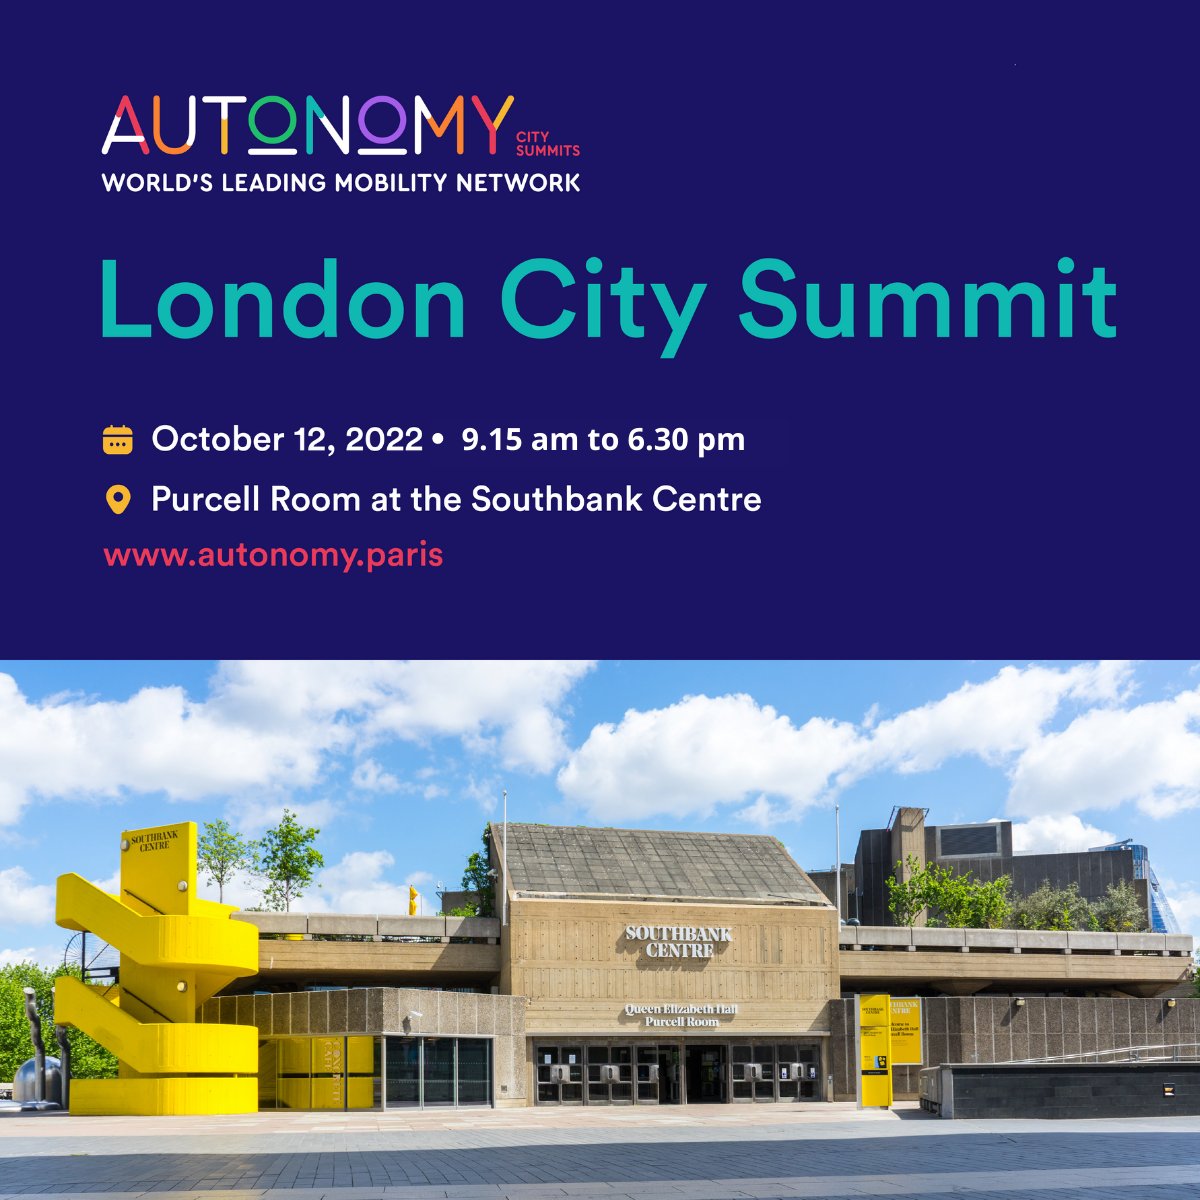 Autonomy London City Summit